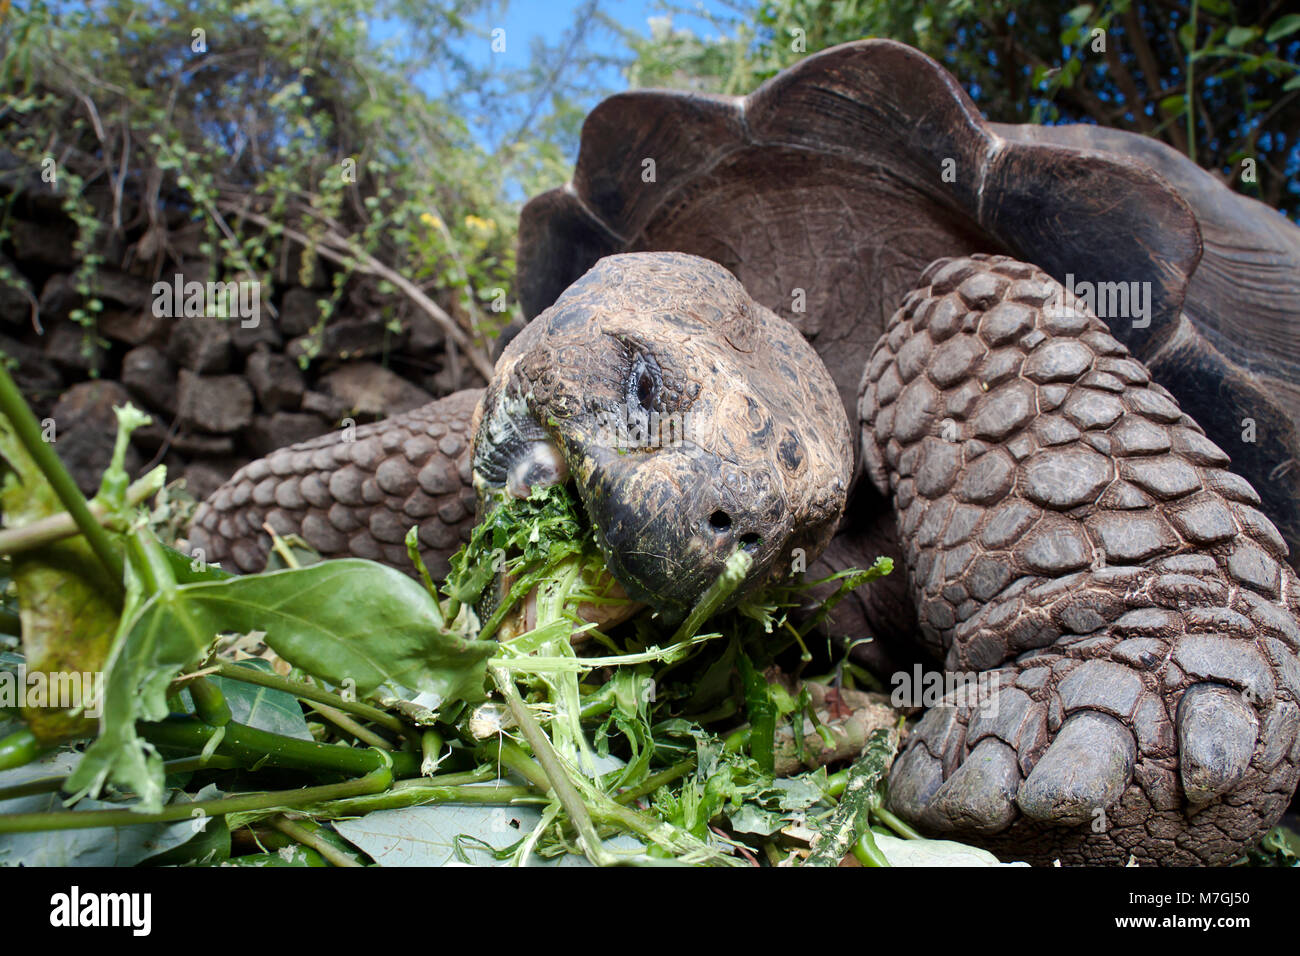 A Galapagos giant tortoise, Geochelone elephantopus, feeding on Santa Cruz Island, Galapagos Archipelago, Ecuador Stock Photo